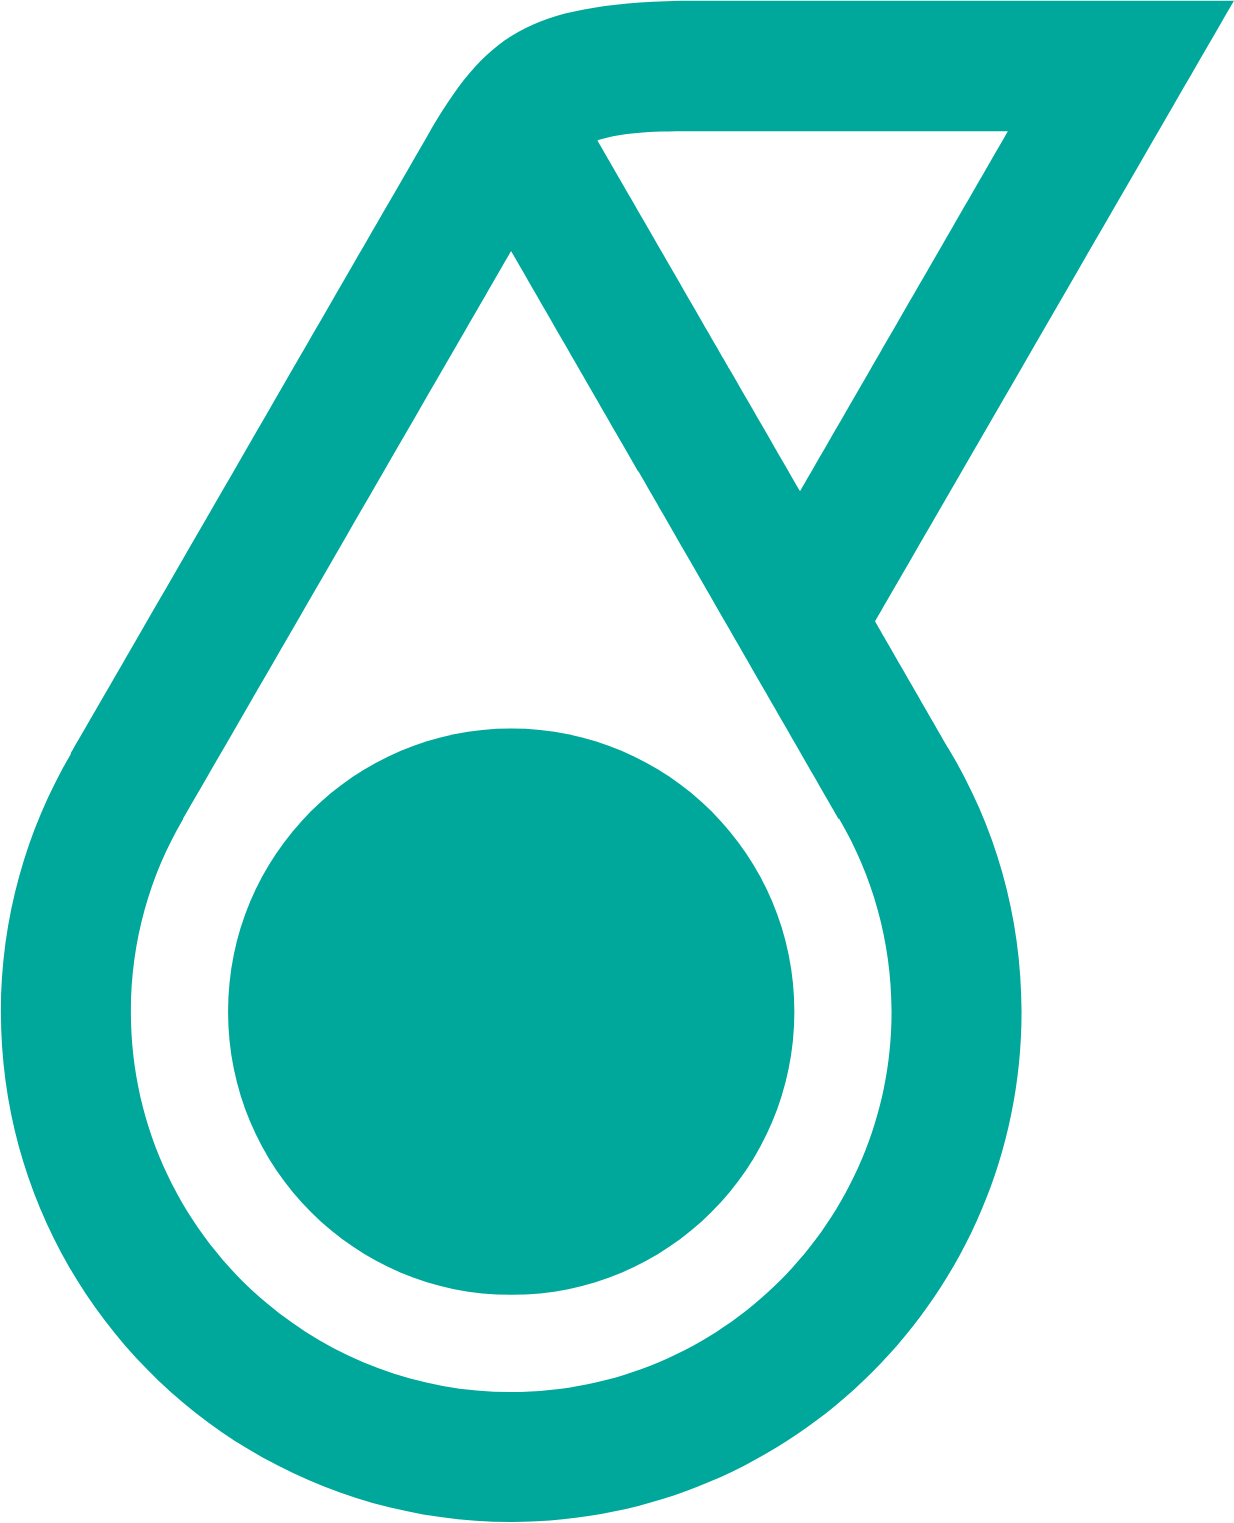 PChem (Petronas Chemicals Group) logo (PNG transparent)